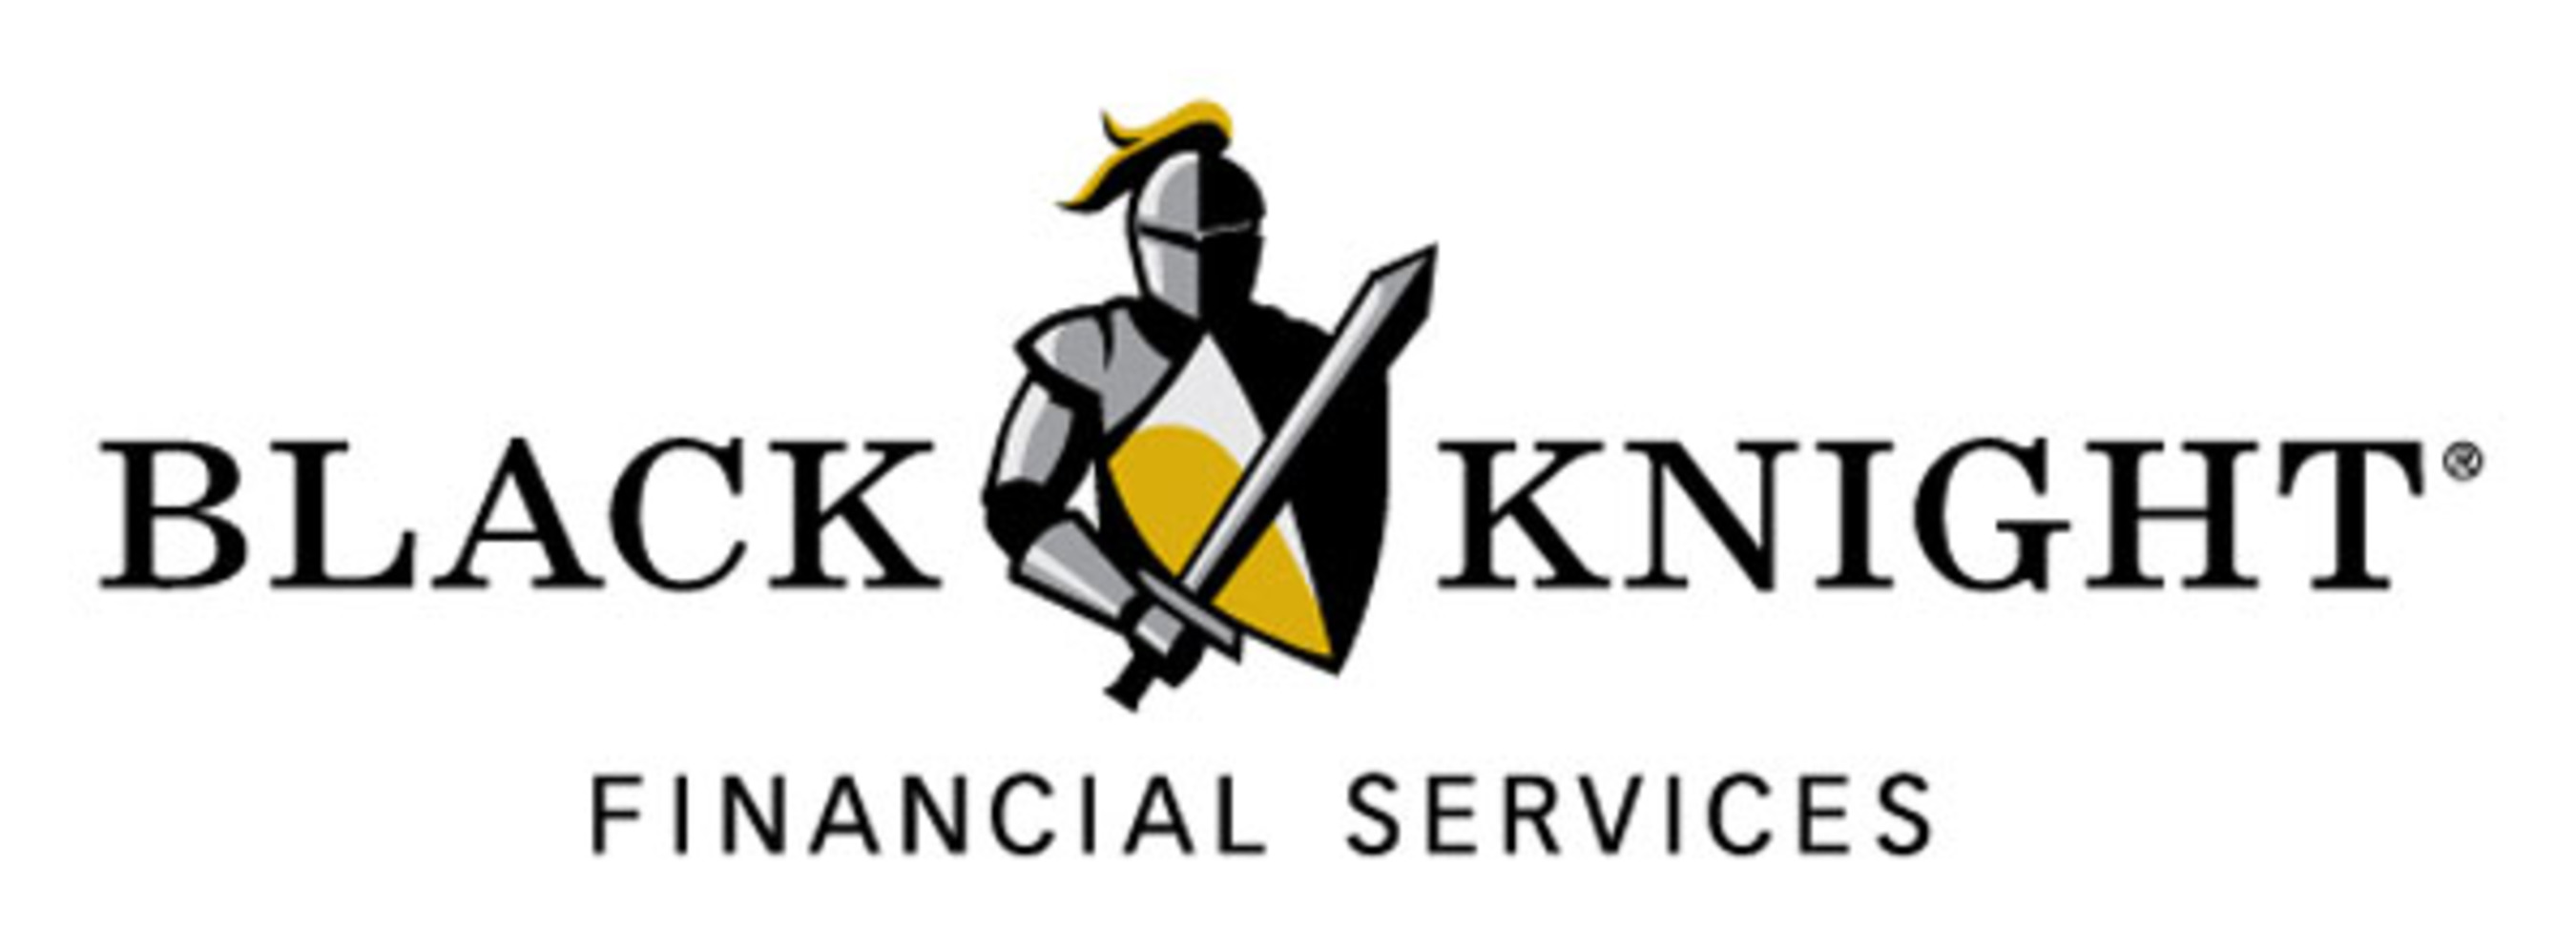 Black Knight Financial Services logo (PRNewsFoto/Black Knight Financial Services)